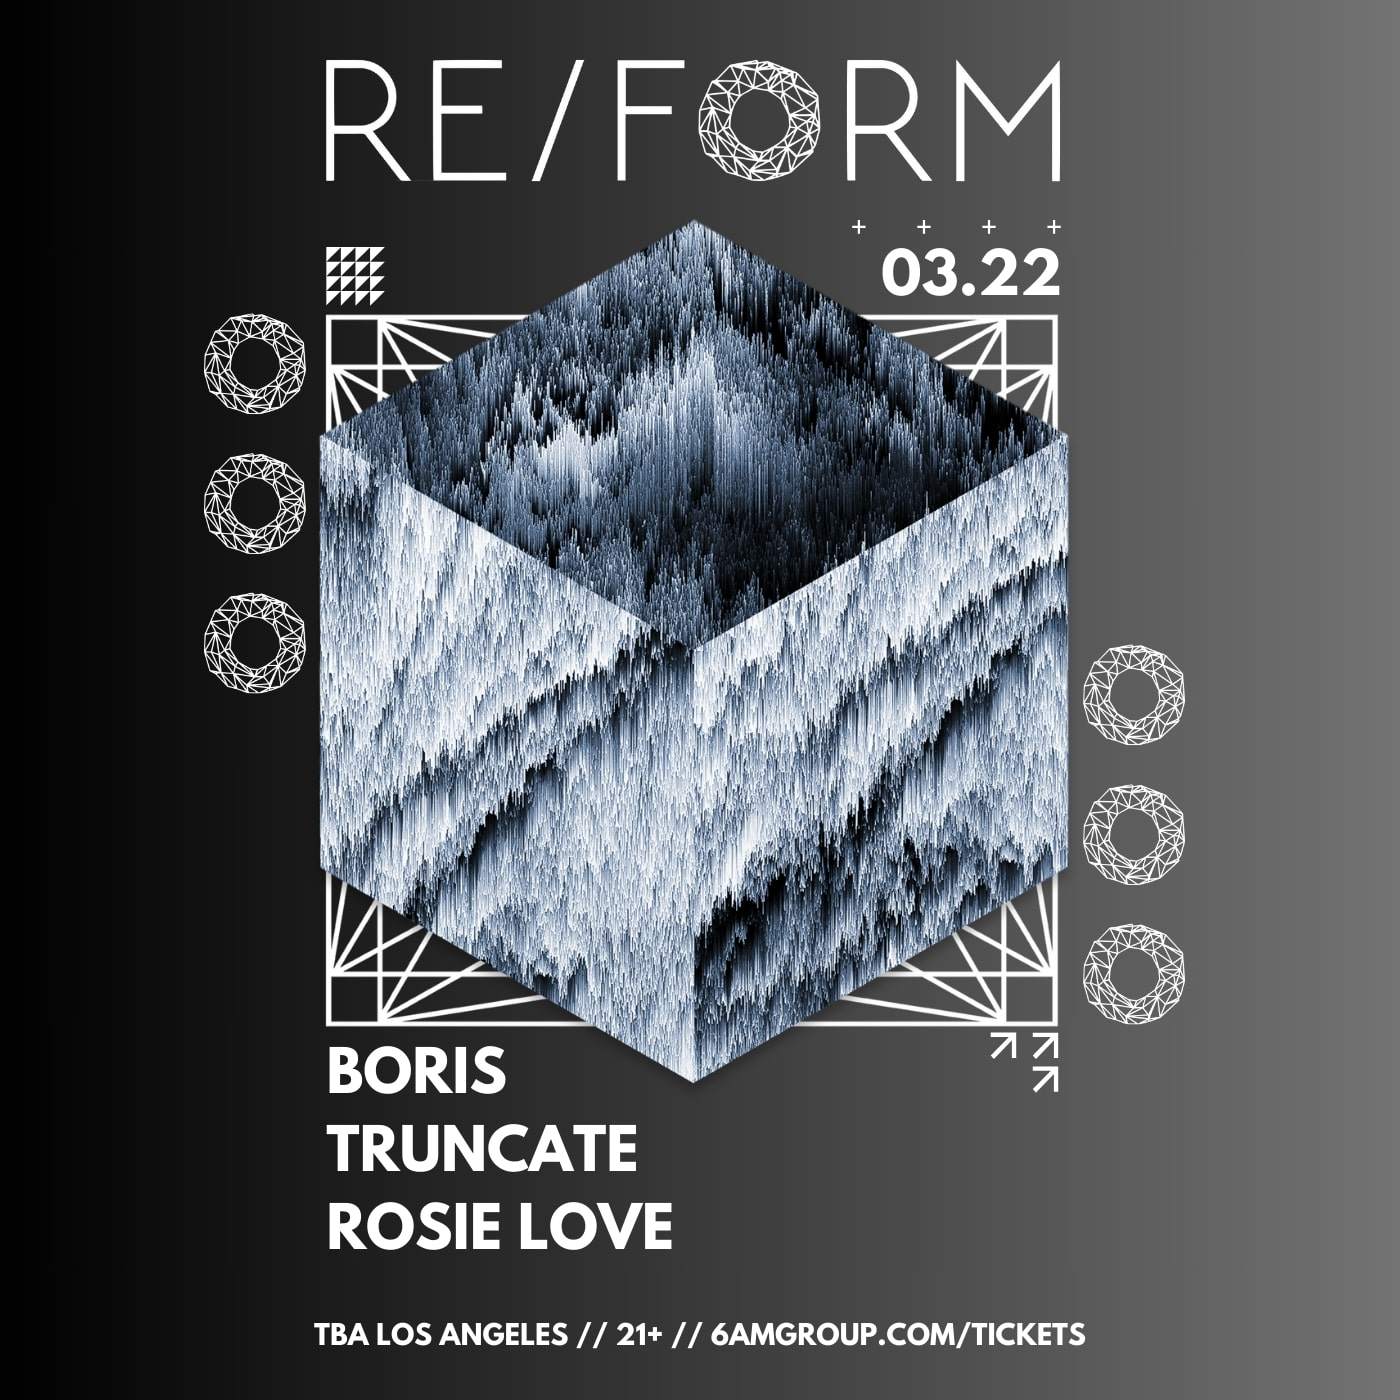 RE/FORM presents: Boris, Truncate, & Rosie Love - フライヤー表